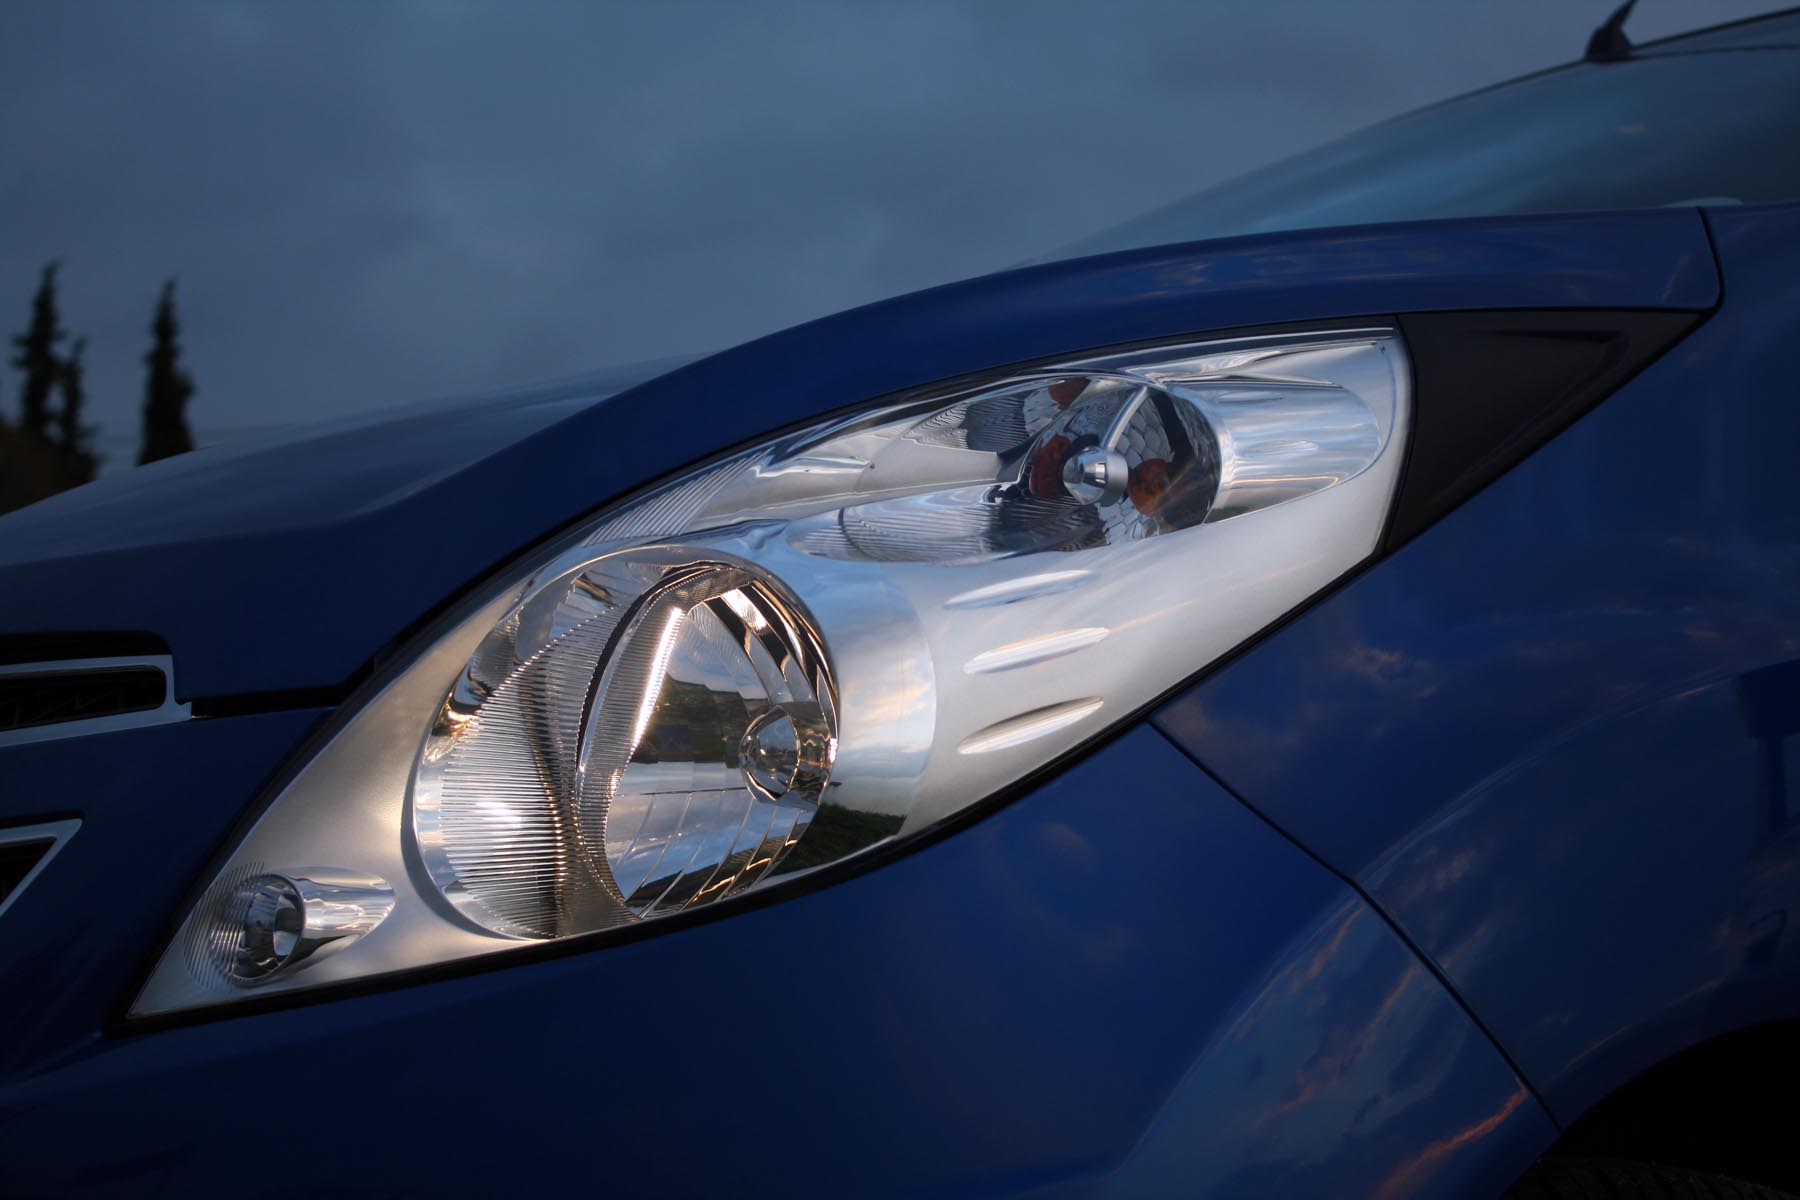 Noul Chevrolet Spark va avea, din martie 2010, un pret de pornire de 6.999 euro, foarte competitiv